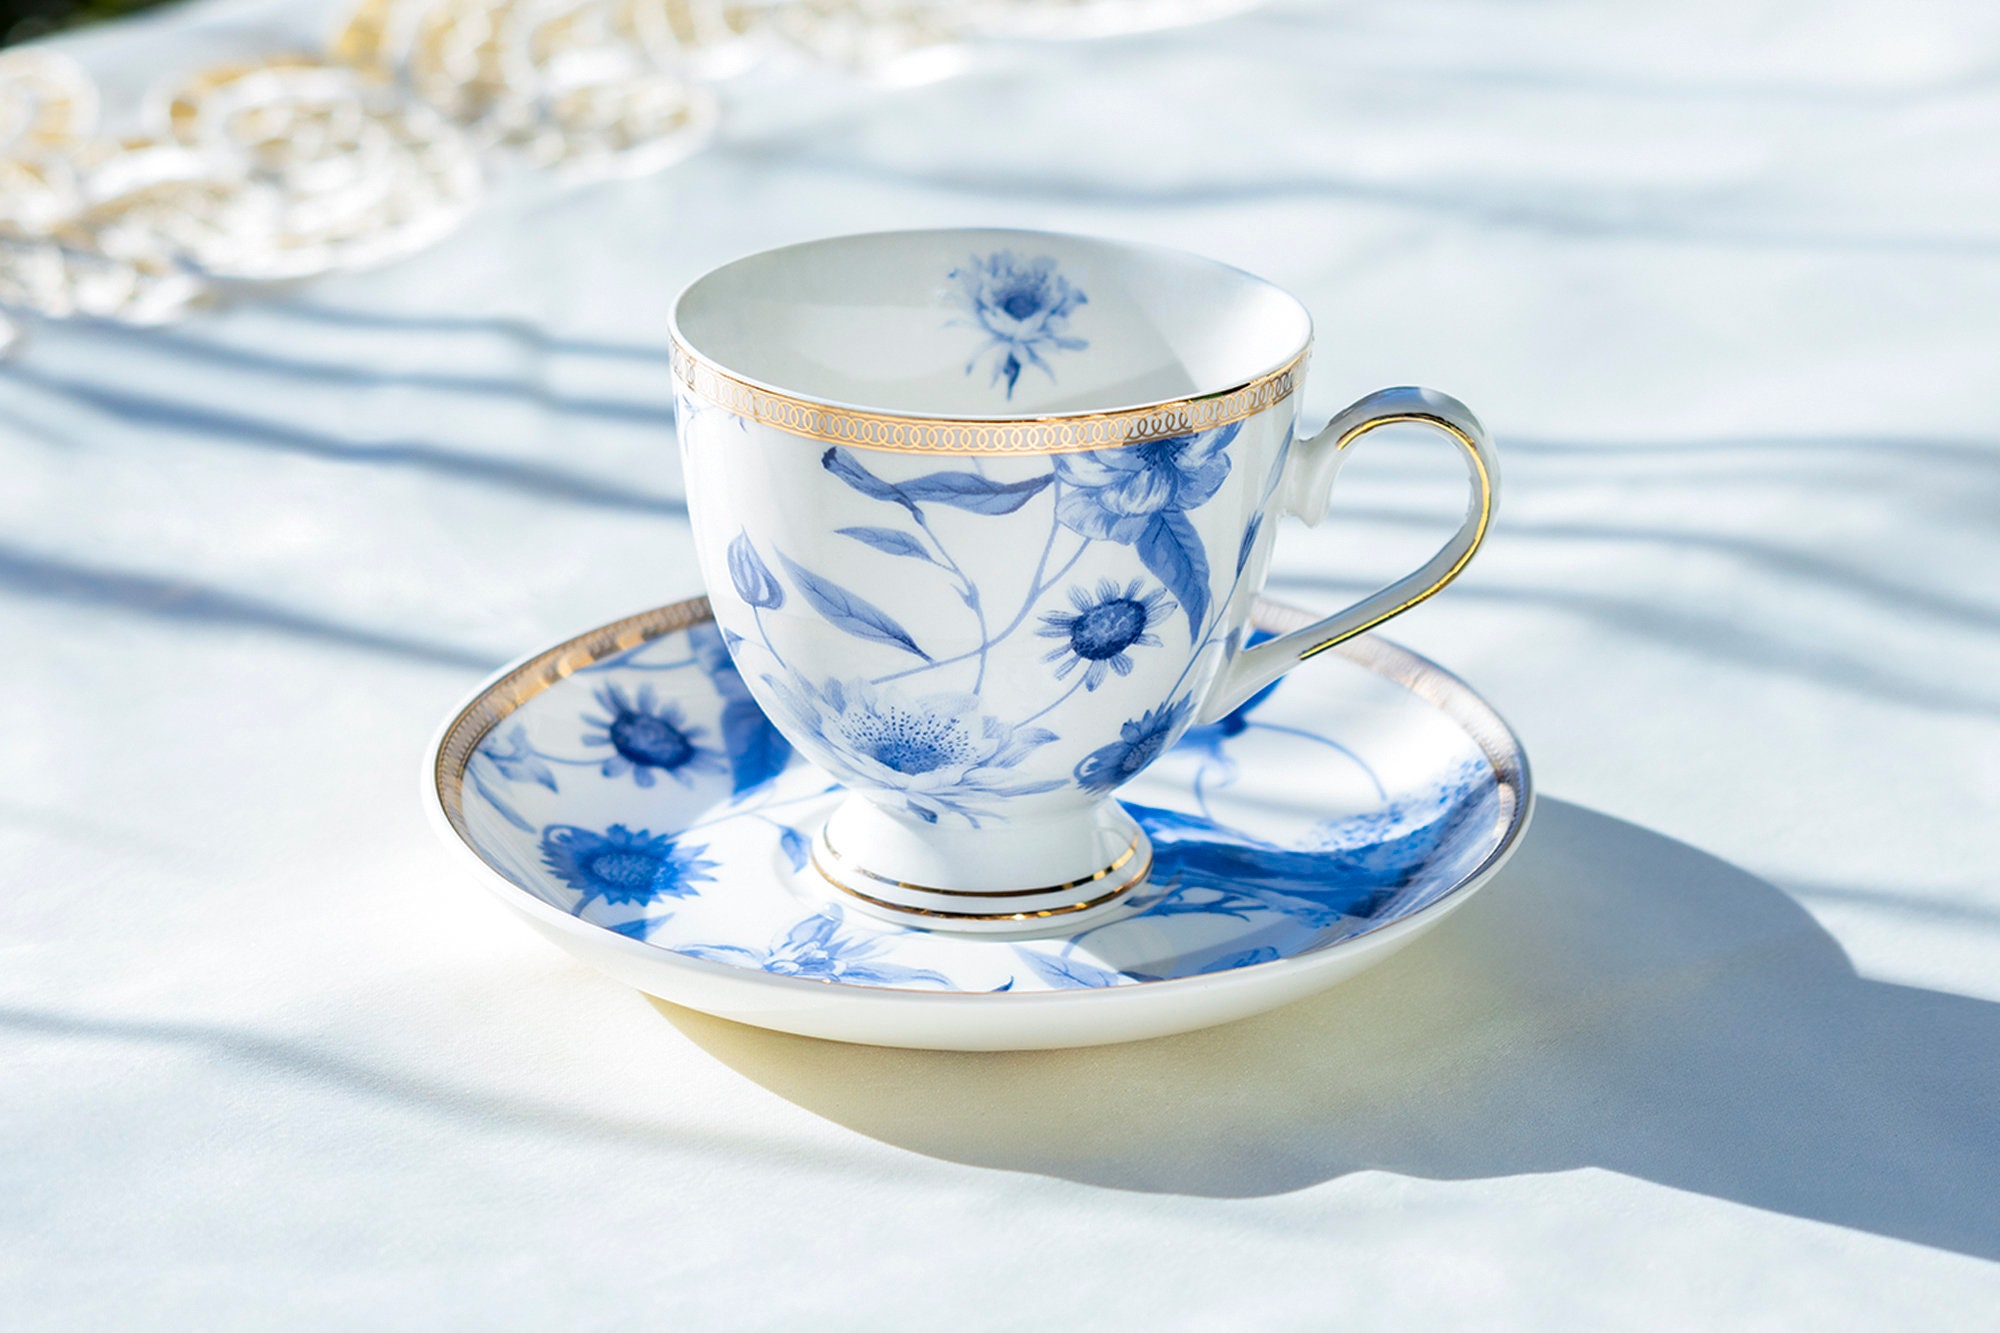 Spring Flowers with Hummingbird Fine Porcelain Latte Cups Tea Set